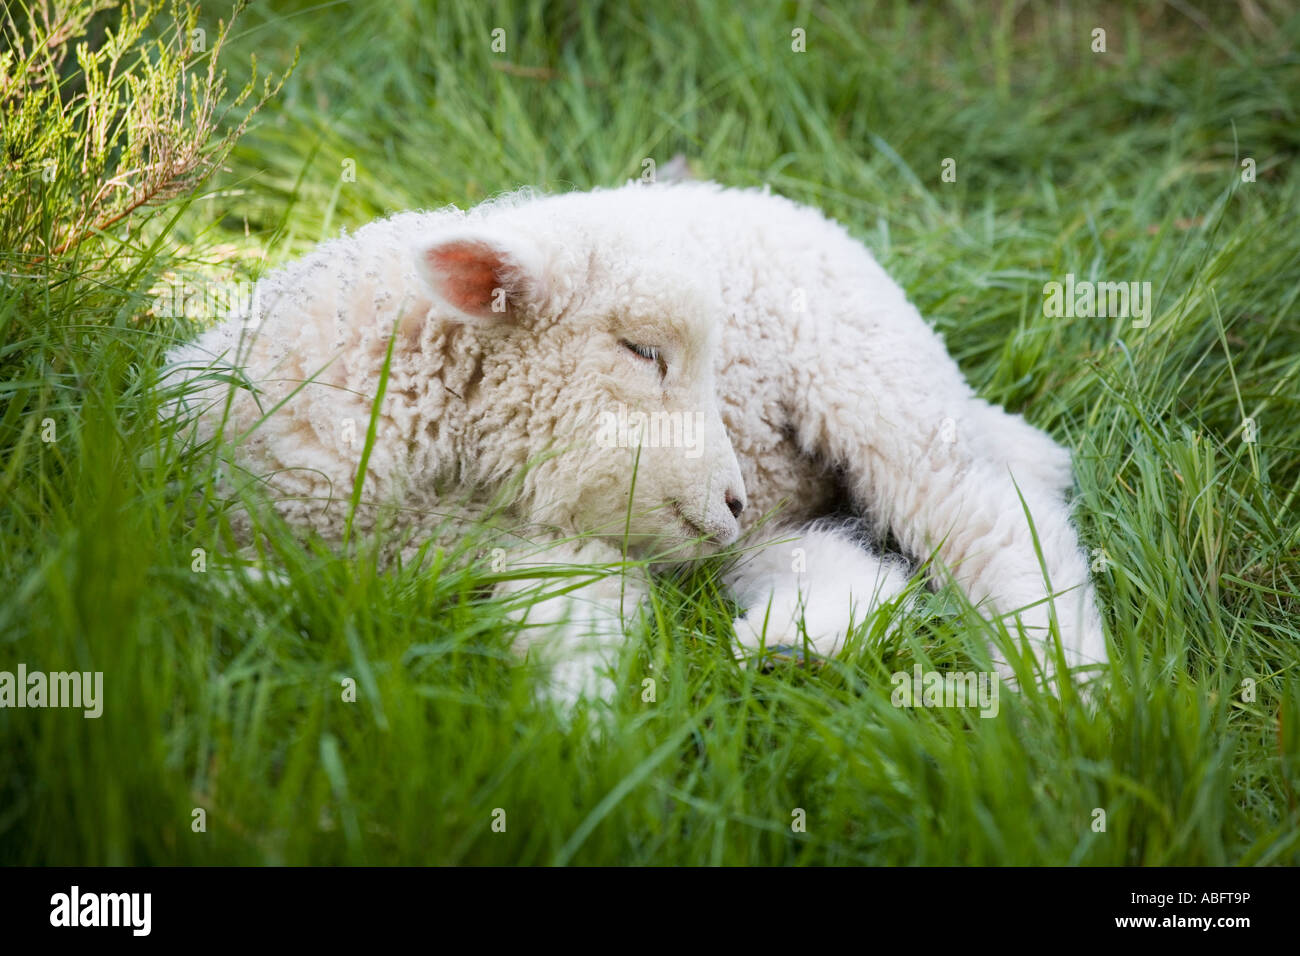 Lamb Sleeping in the Grass Stock Photo